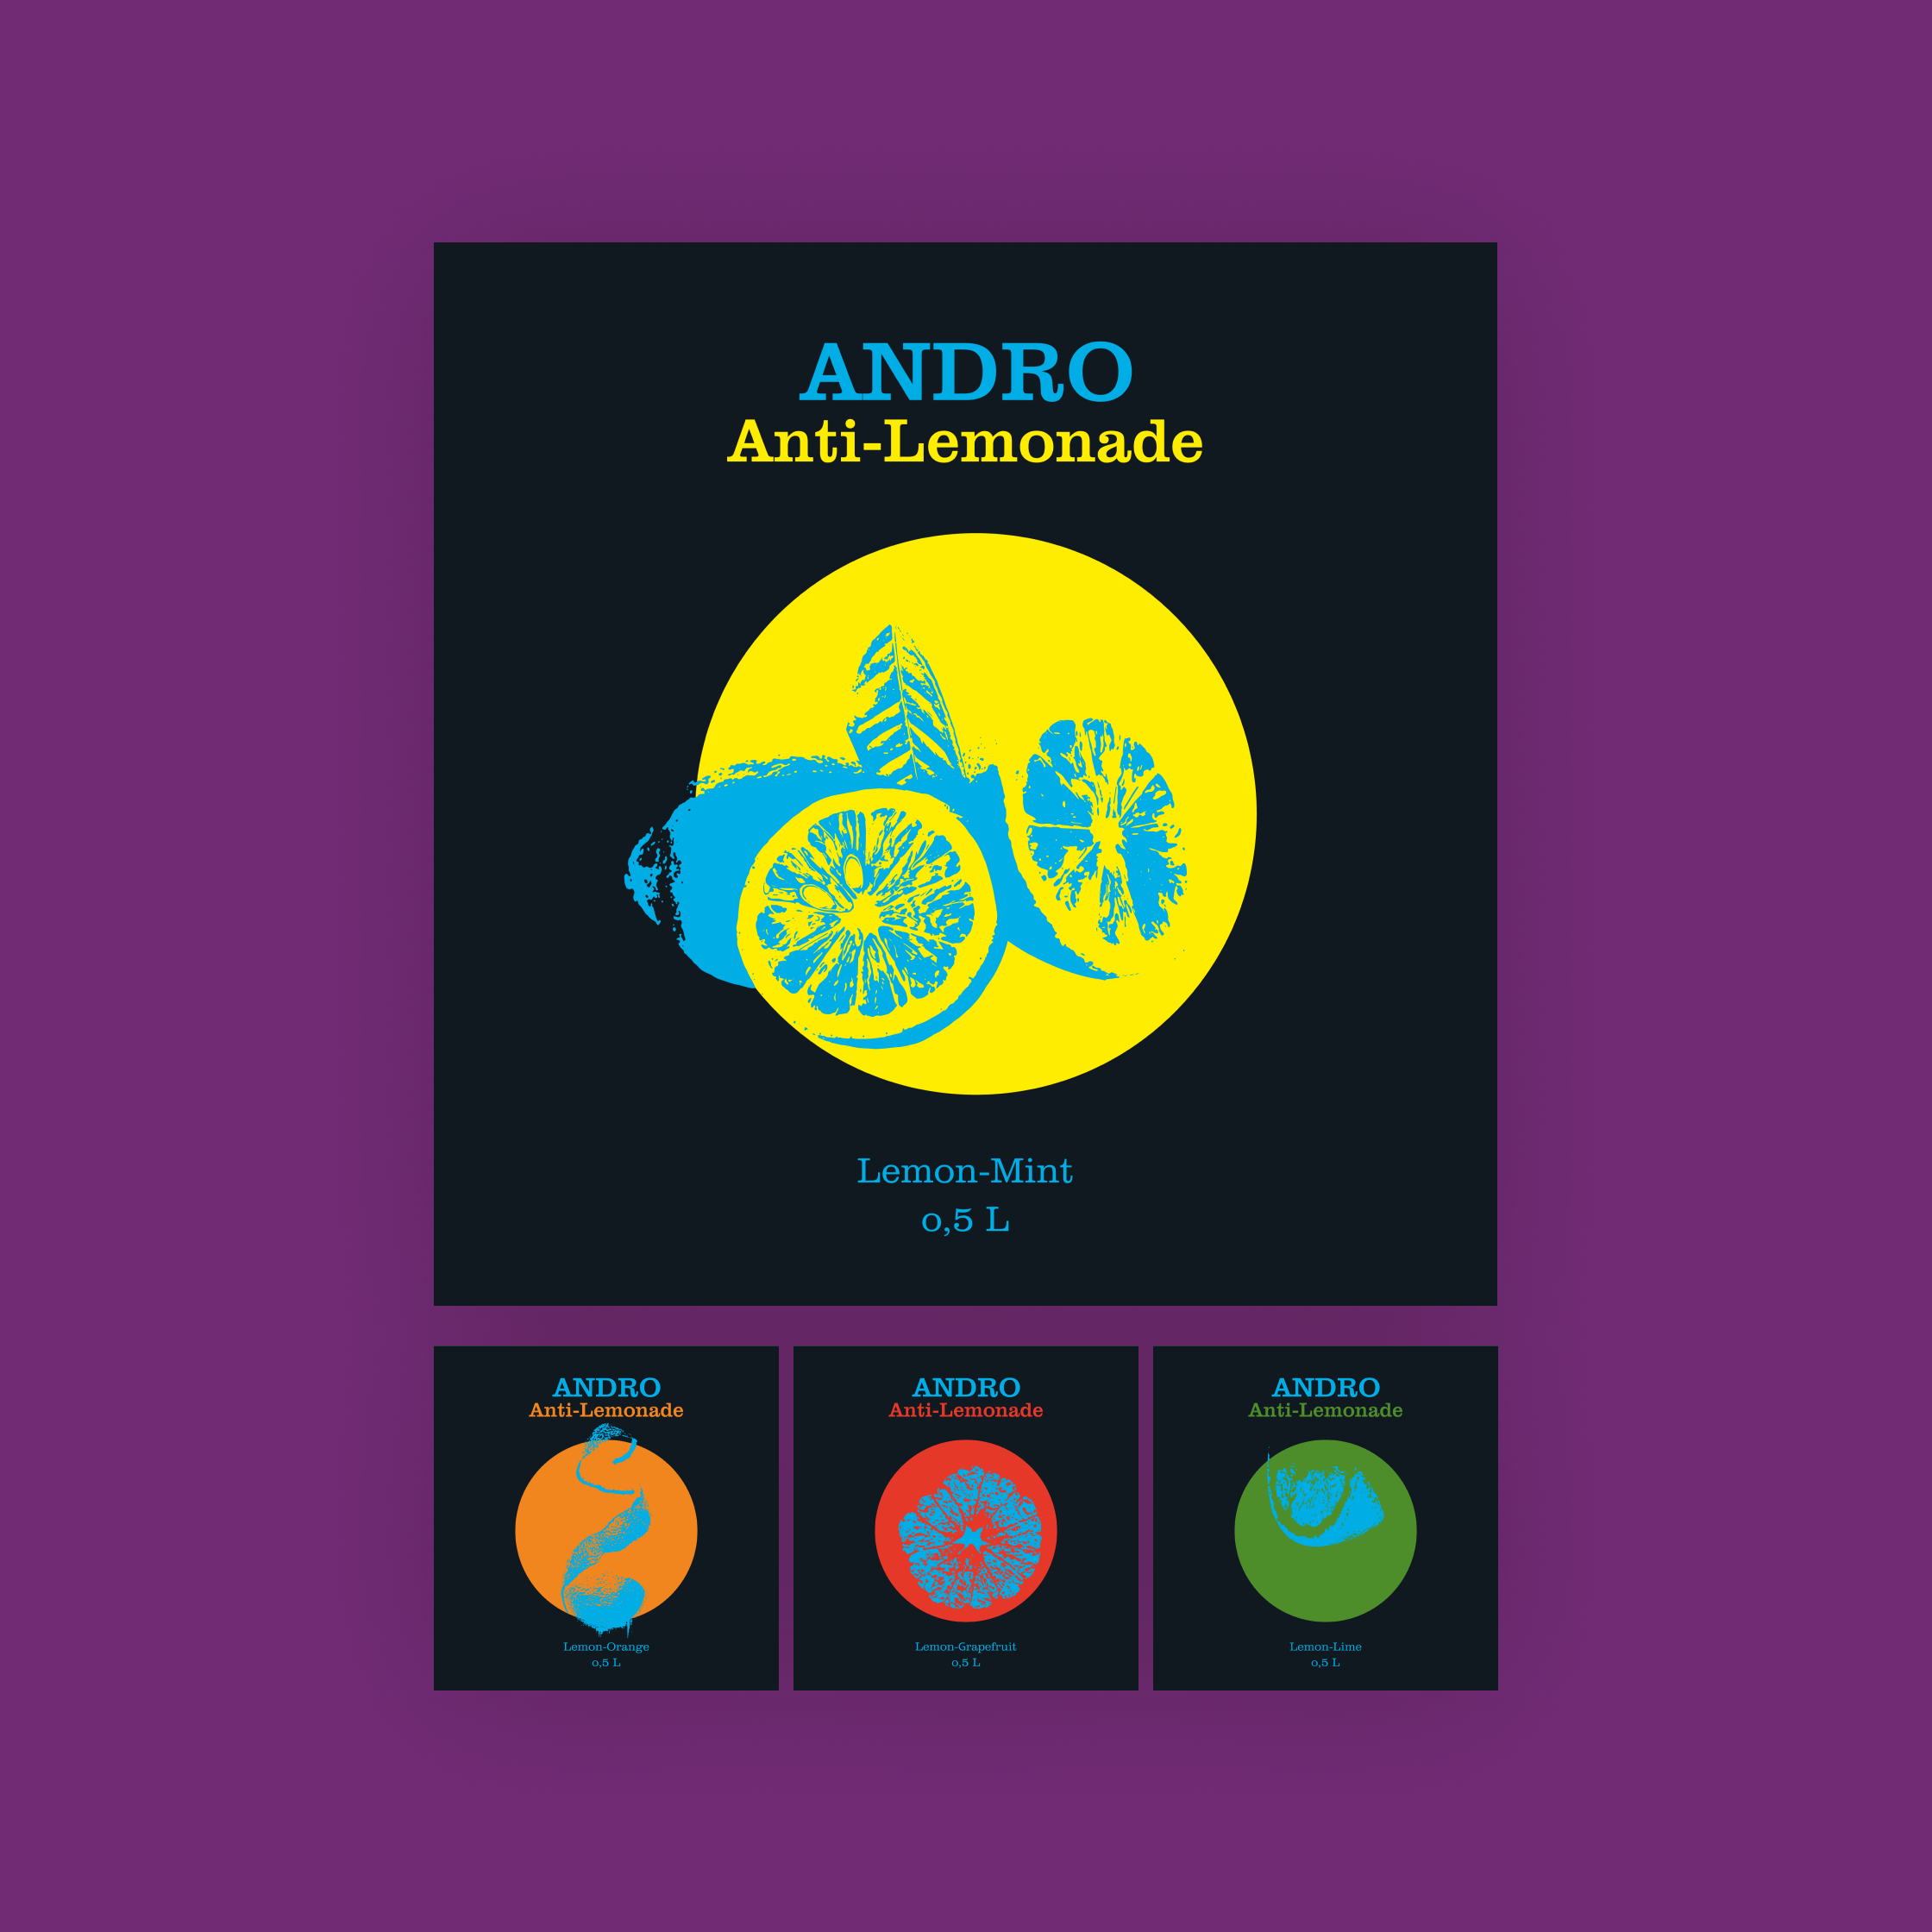 Andro Lemonade project